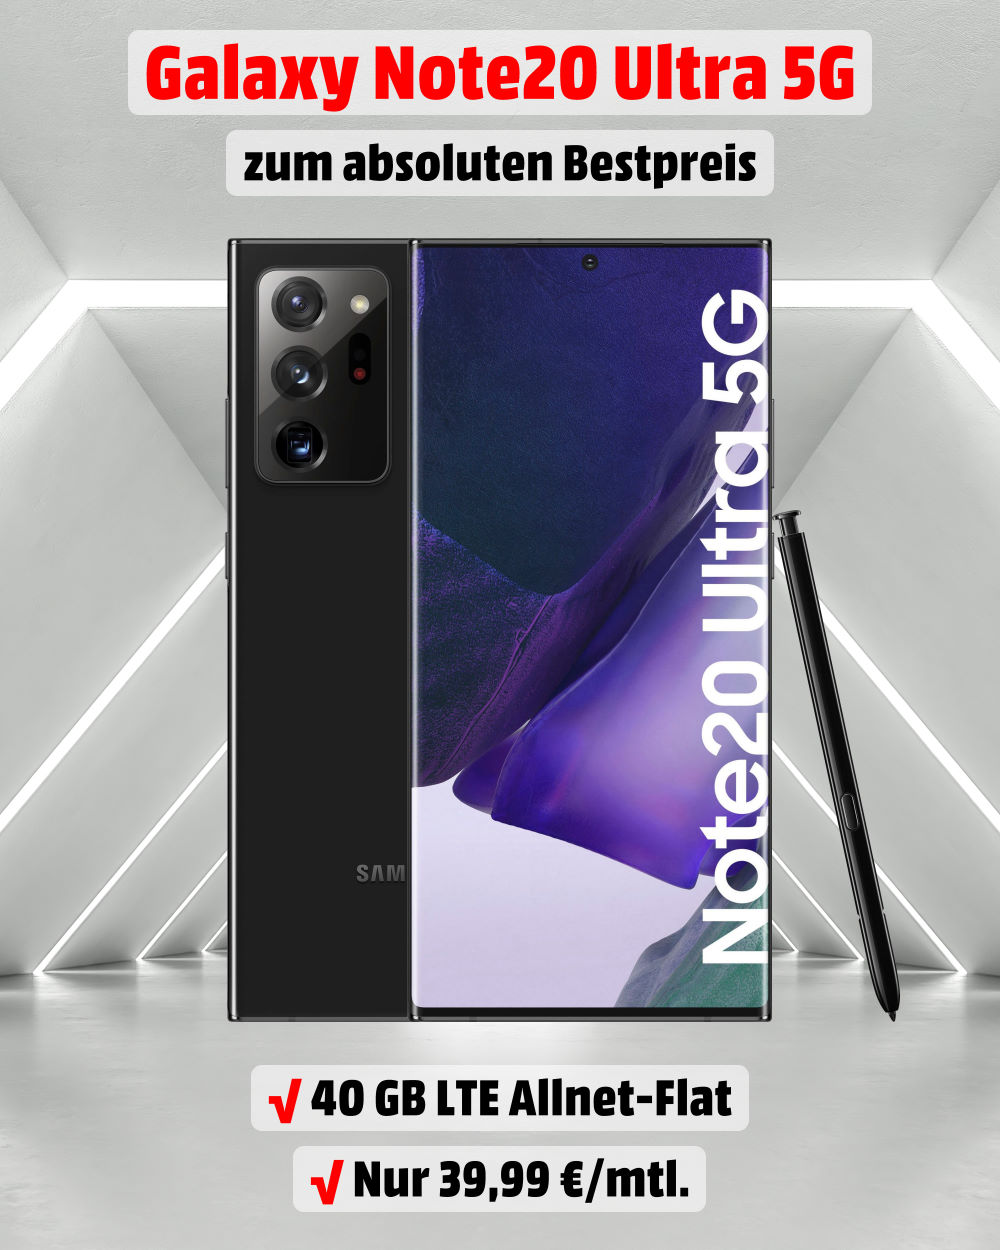 Galaxy Note20 Ultra 5G inkl. 40 GB LTE Allnet-Flat zum absoluten Bestpreis